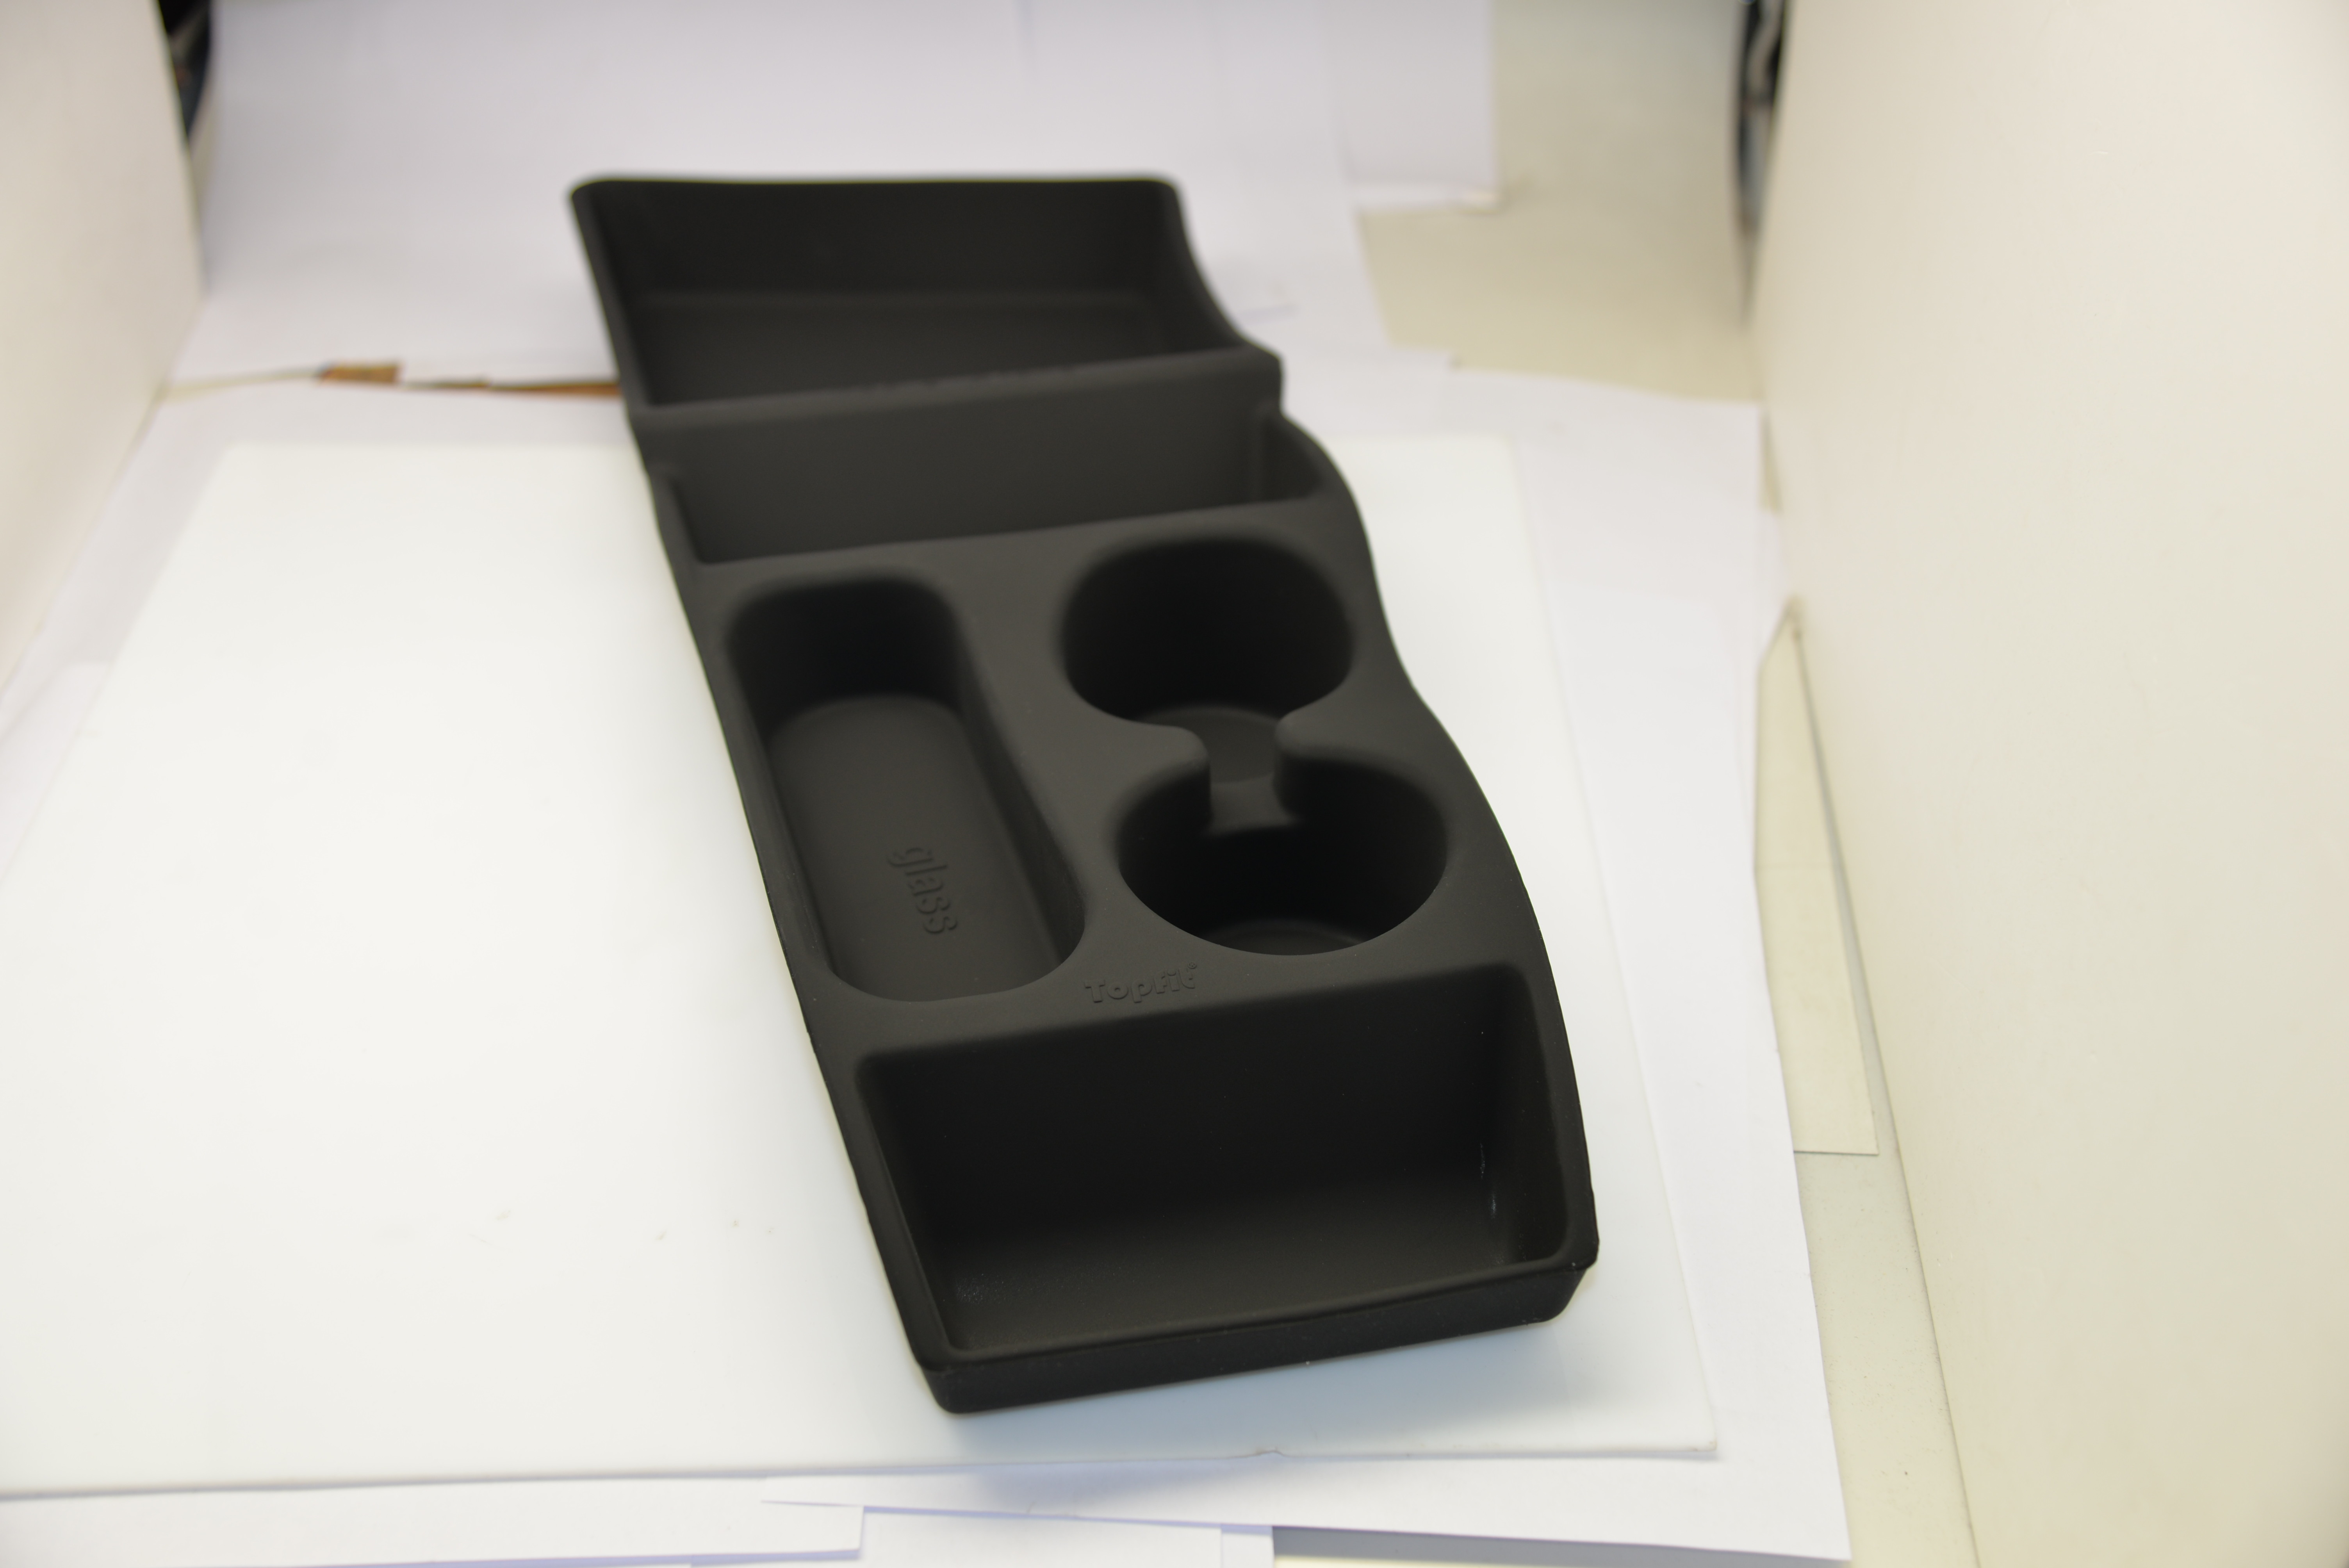  Topfit Portable Center Container /Storage Box for Tesla-Black Manufactures